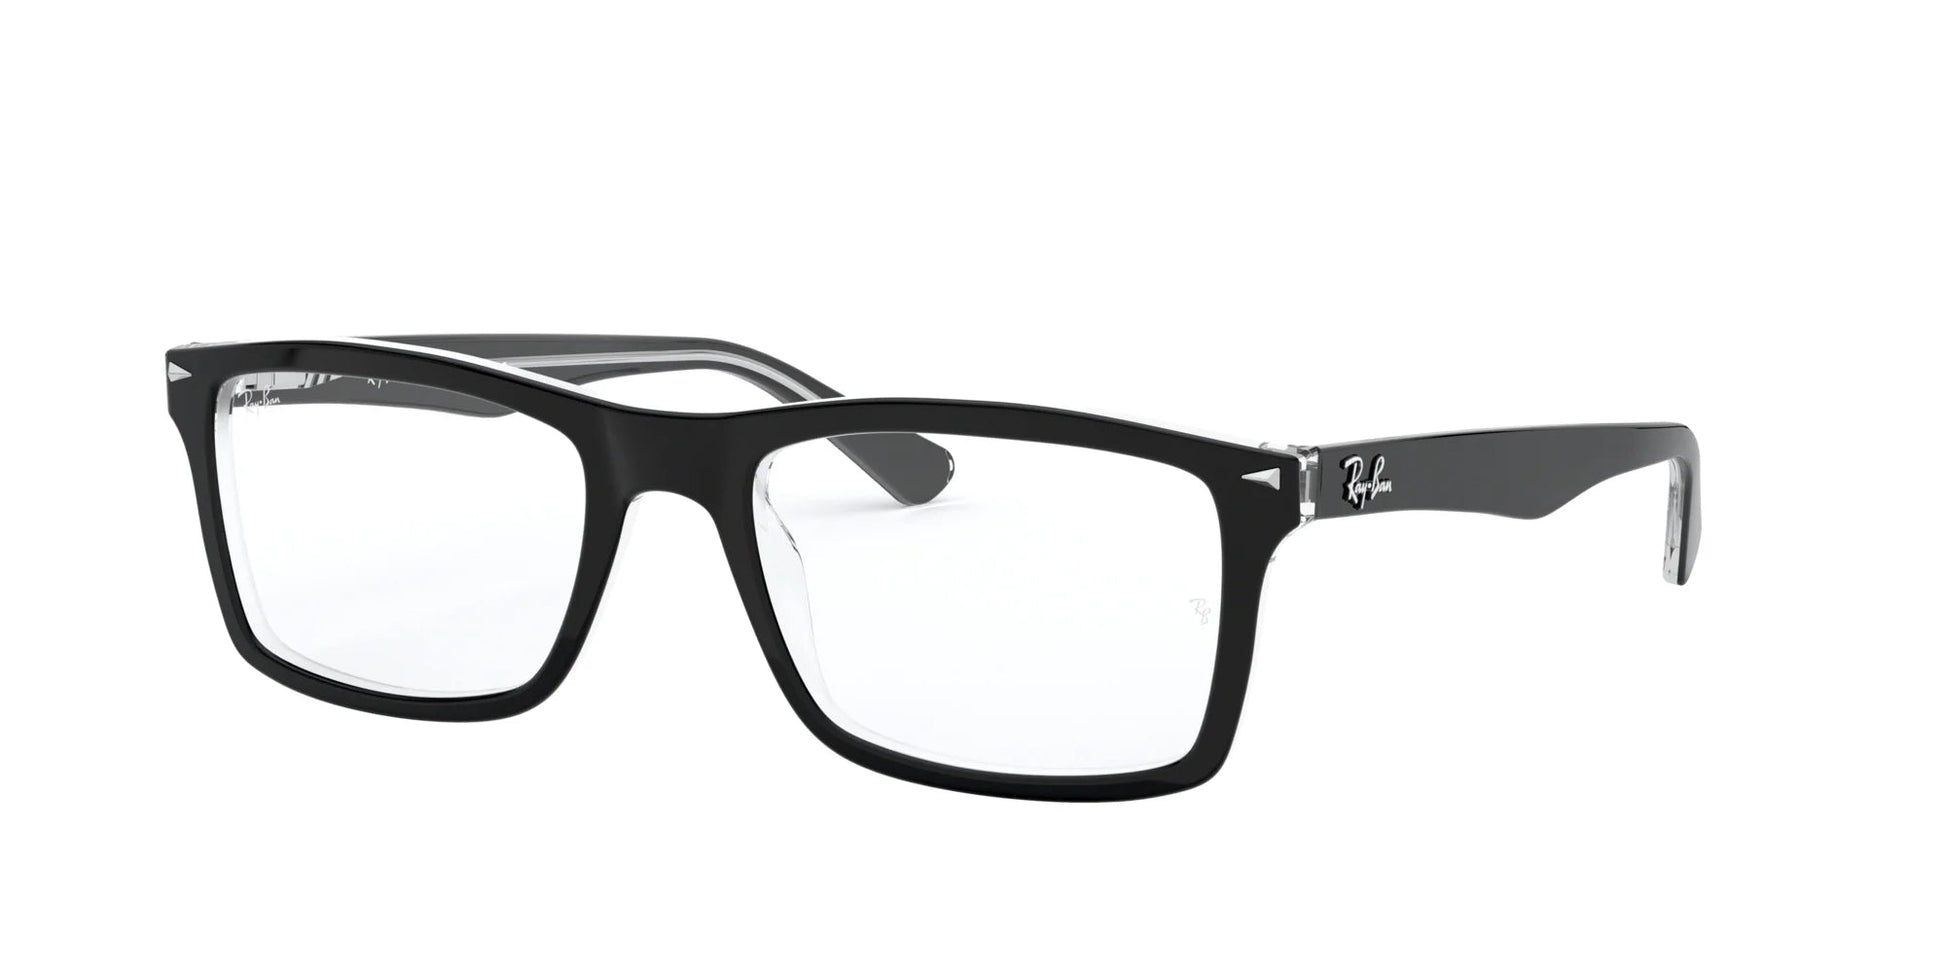 Ray-Ban RX5287 Eyeglasses Black On Transparent / Clear